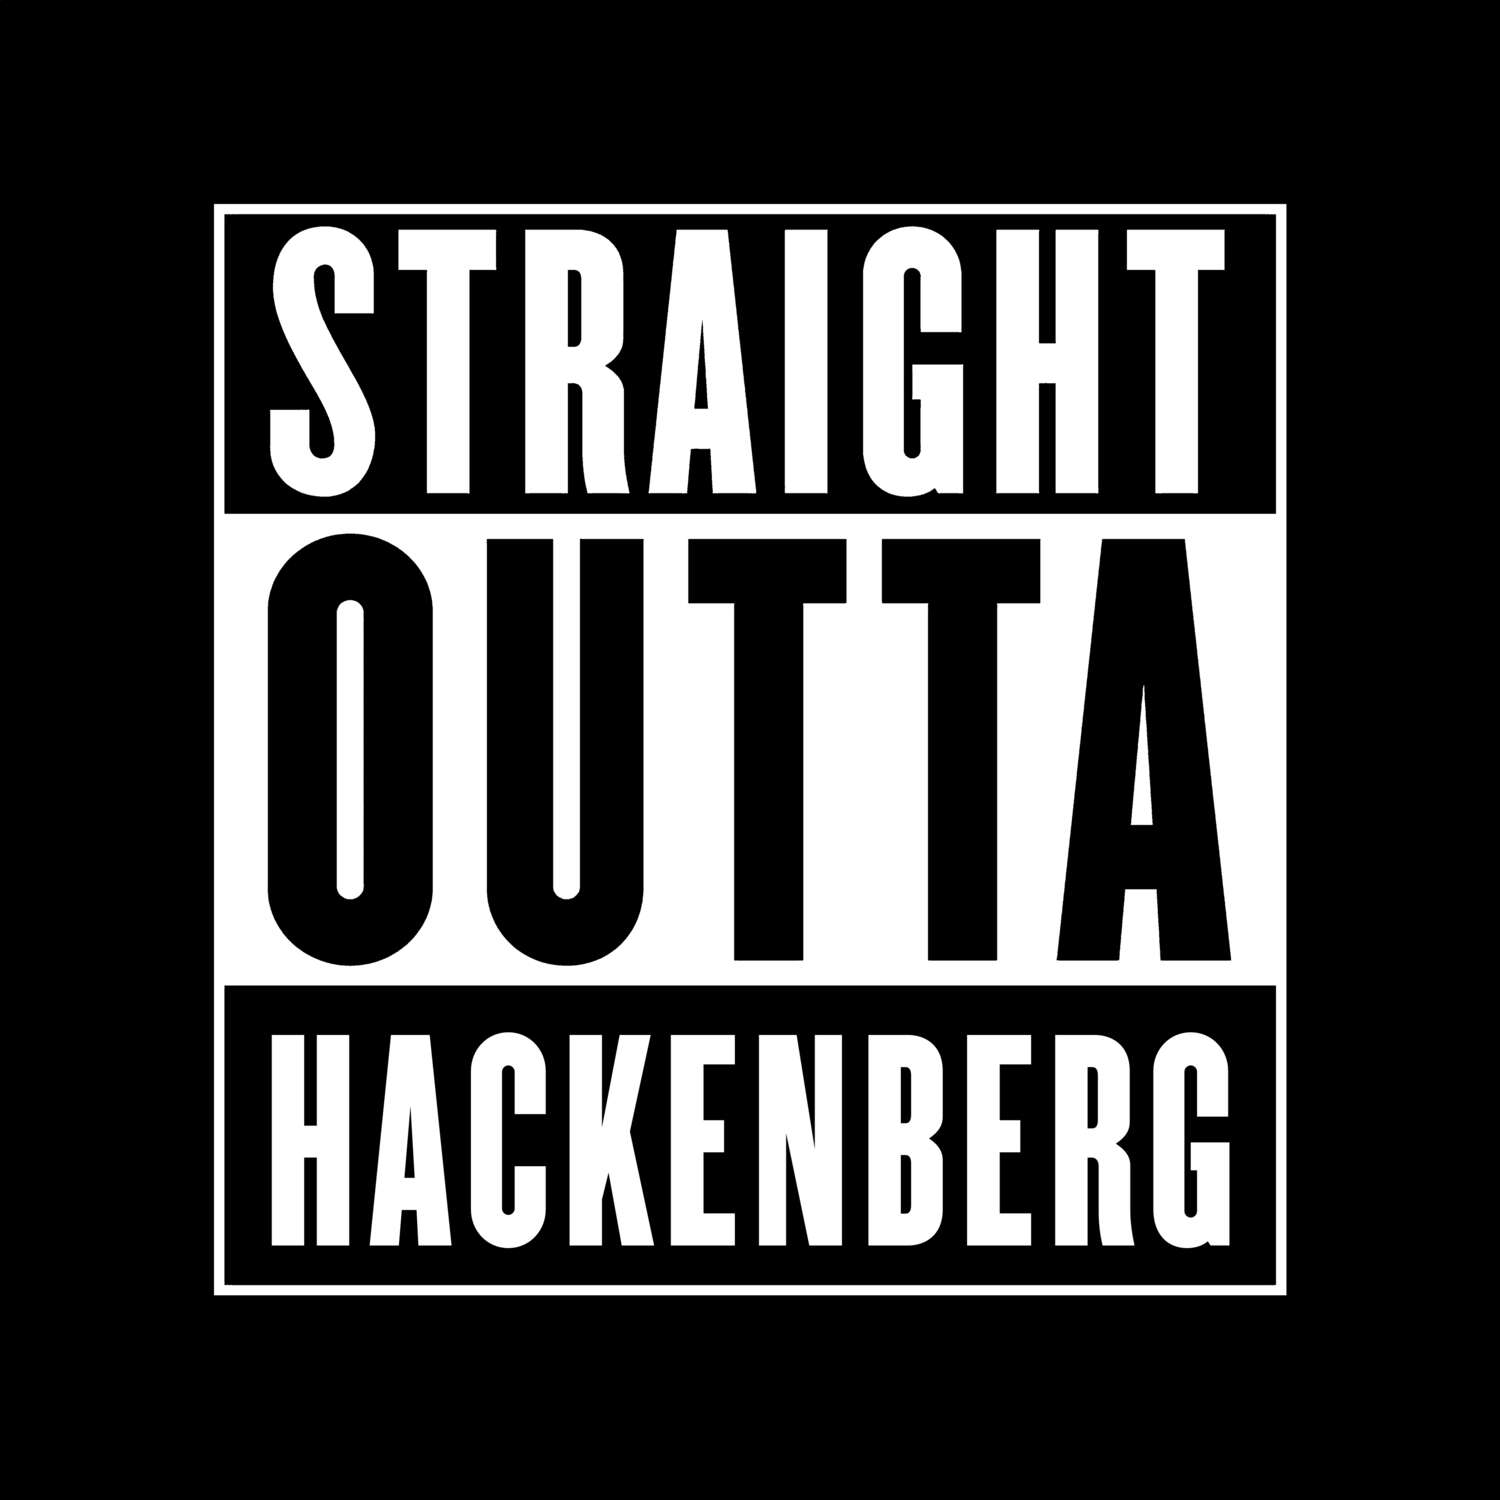 Hackenberg T-Shirt »Straight Outta«